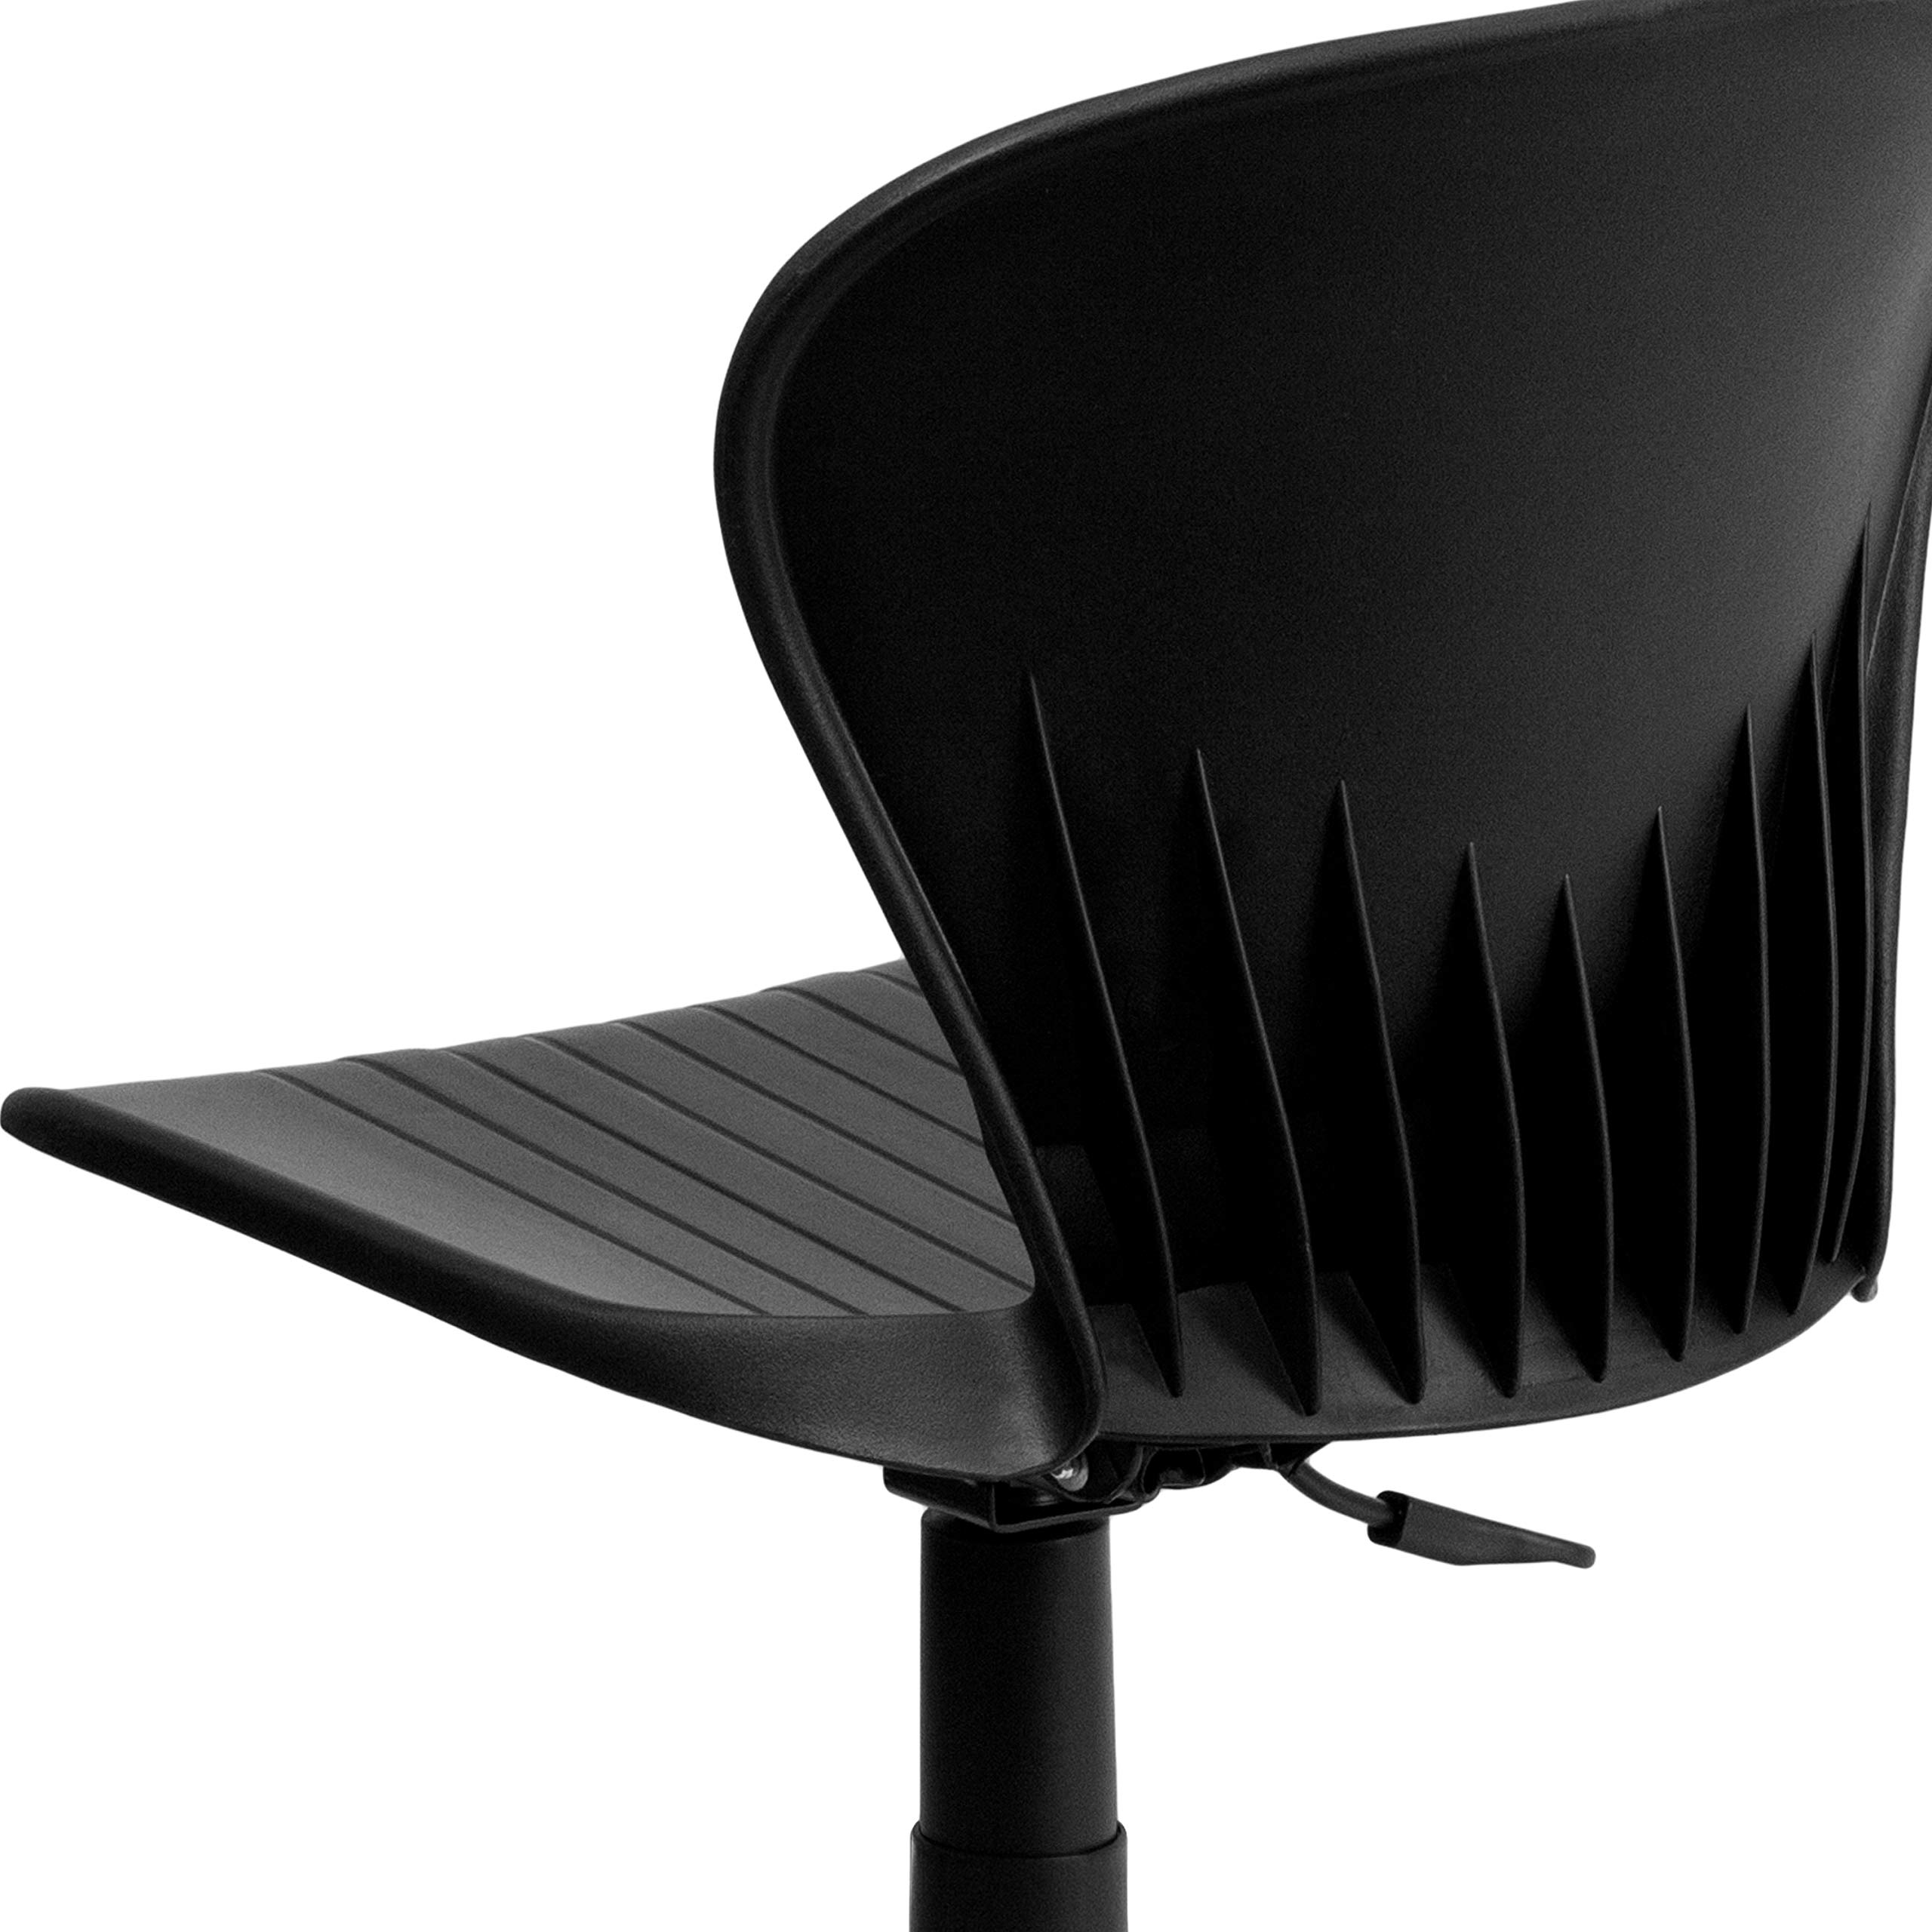 Flash Furniture Sorho Mid-Back Black Plastic Swivel Task Office Chair